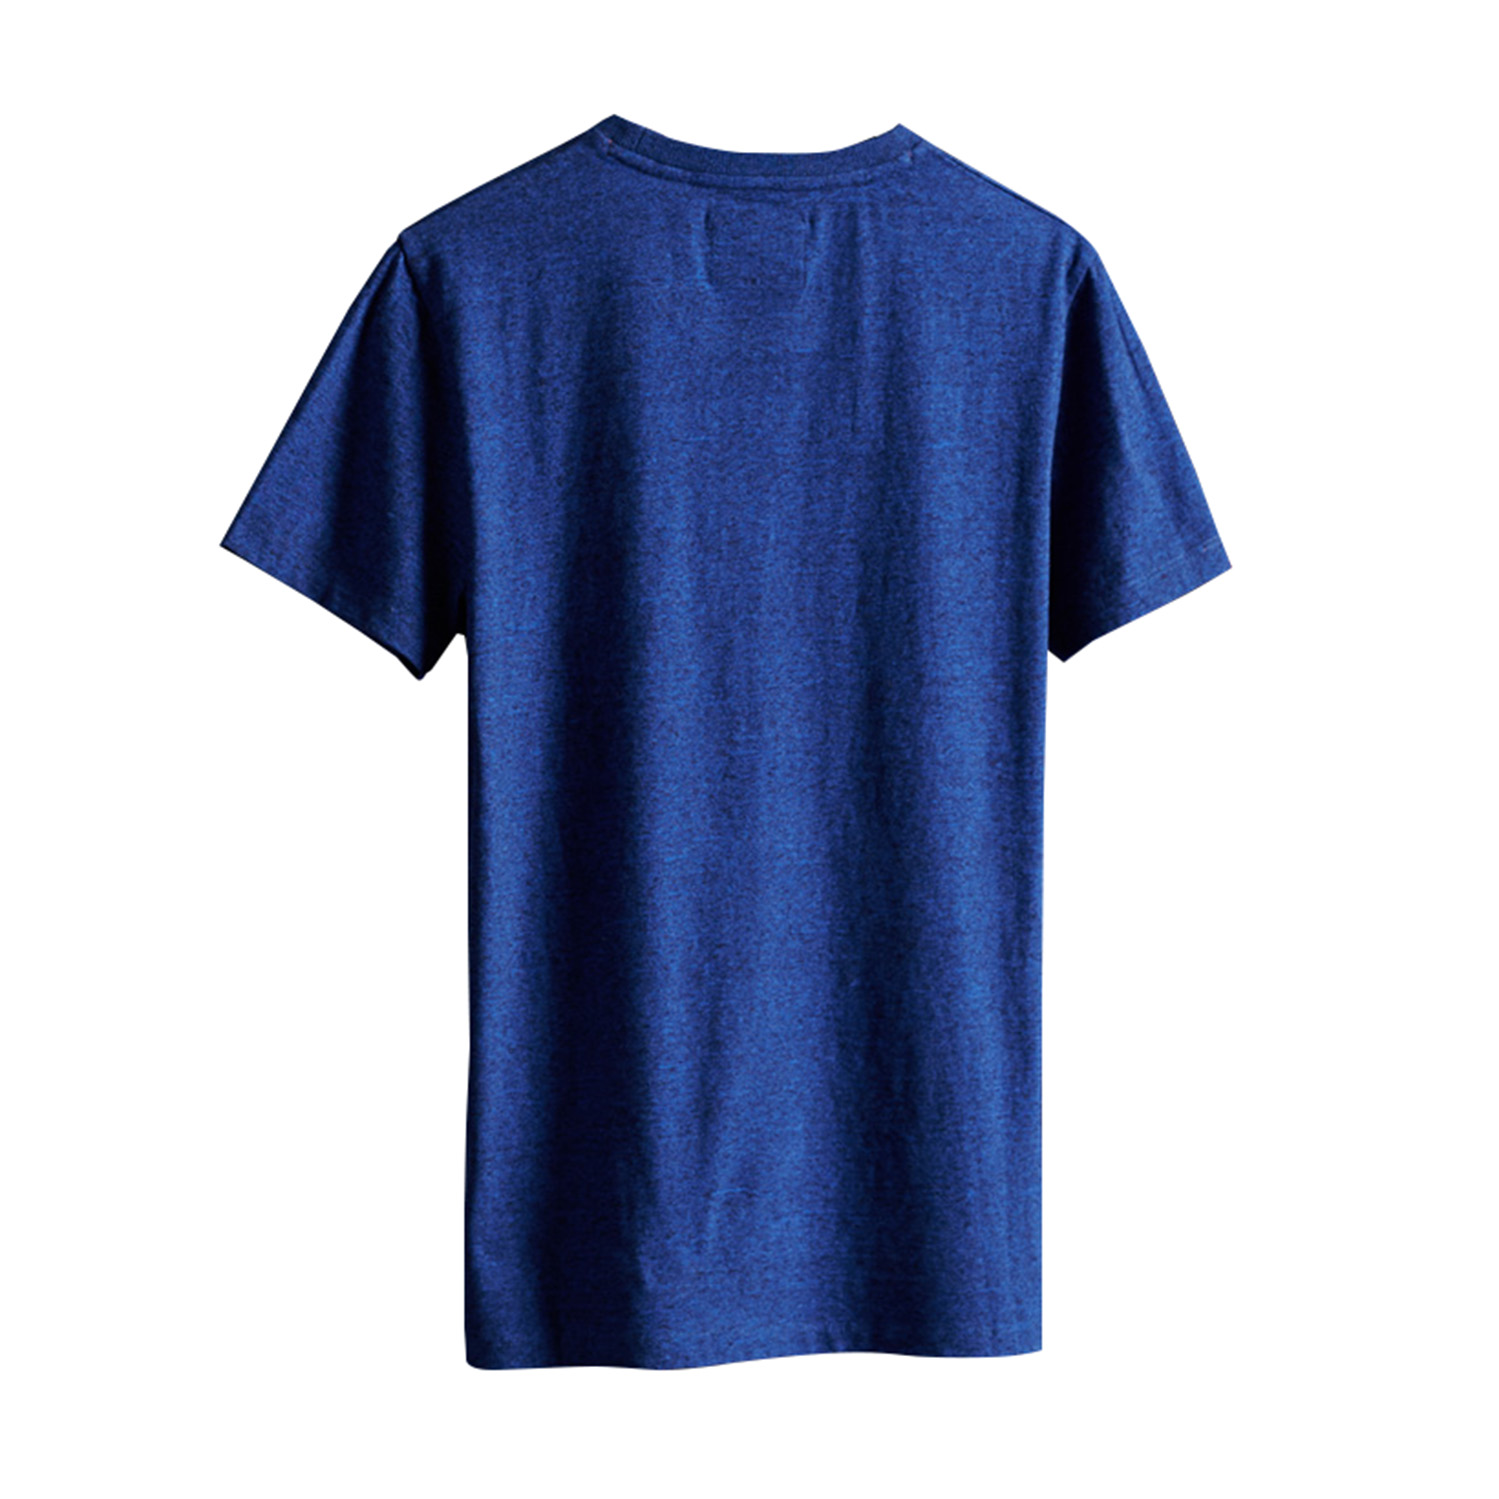 Superdry Herren Orange Label Vintage Embroidery Tee T-Shirt M10000119A blau